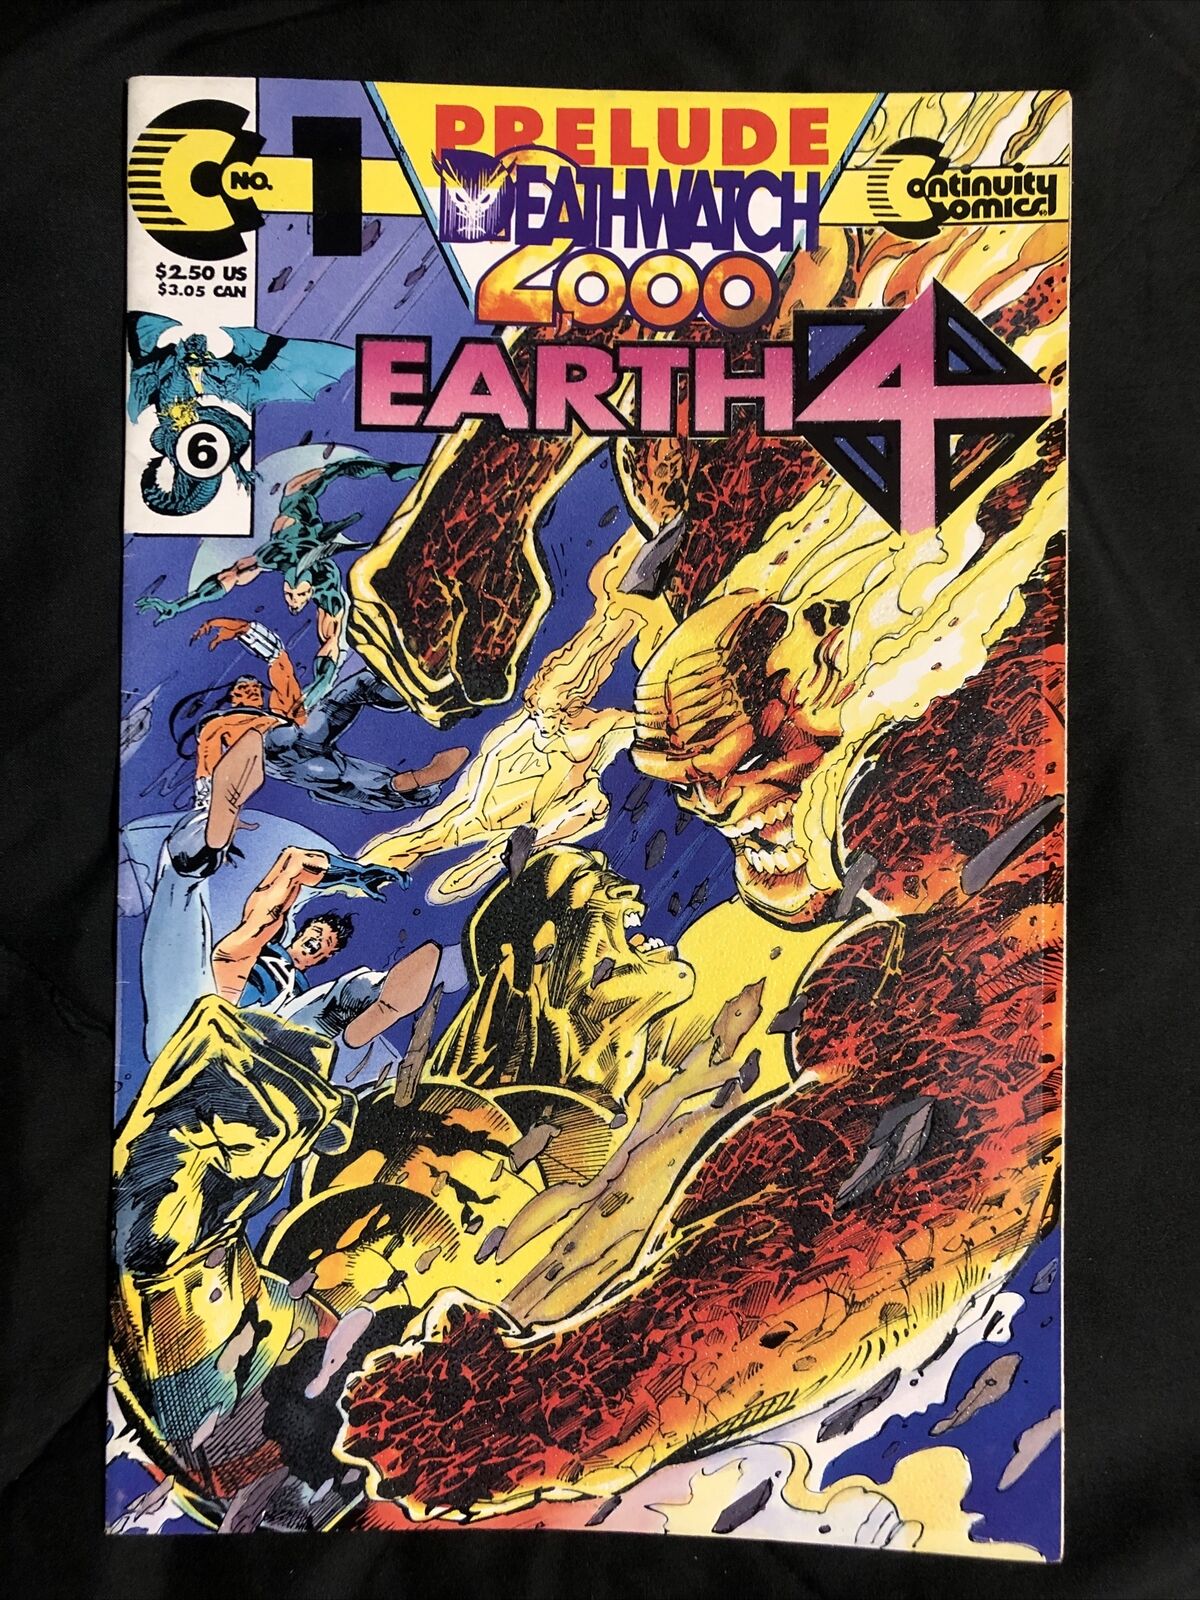 Prelude Earth 4 Deathwatch 2000 #6 w/card (April 1993) Continuity Comics (s2)